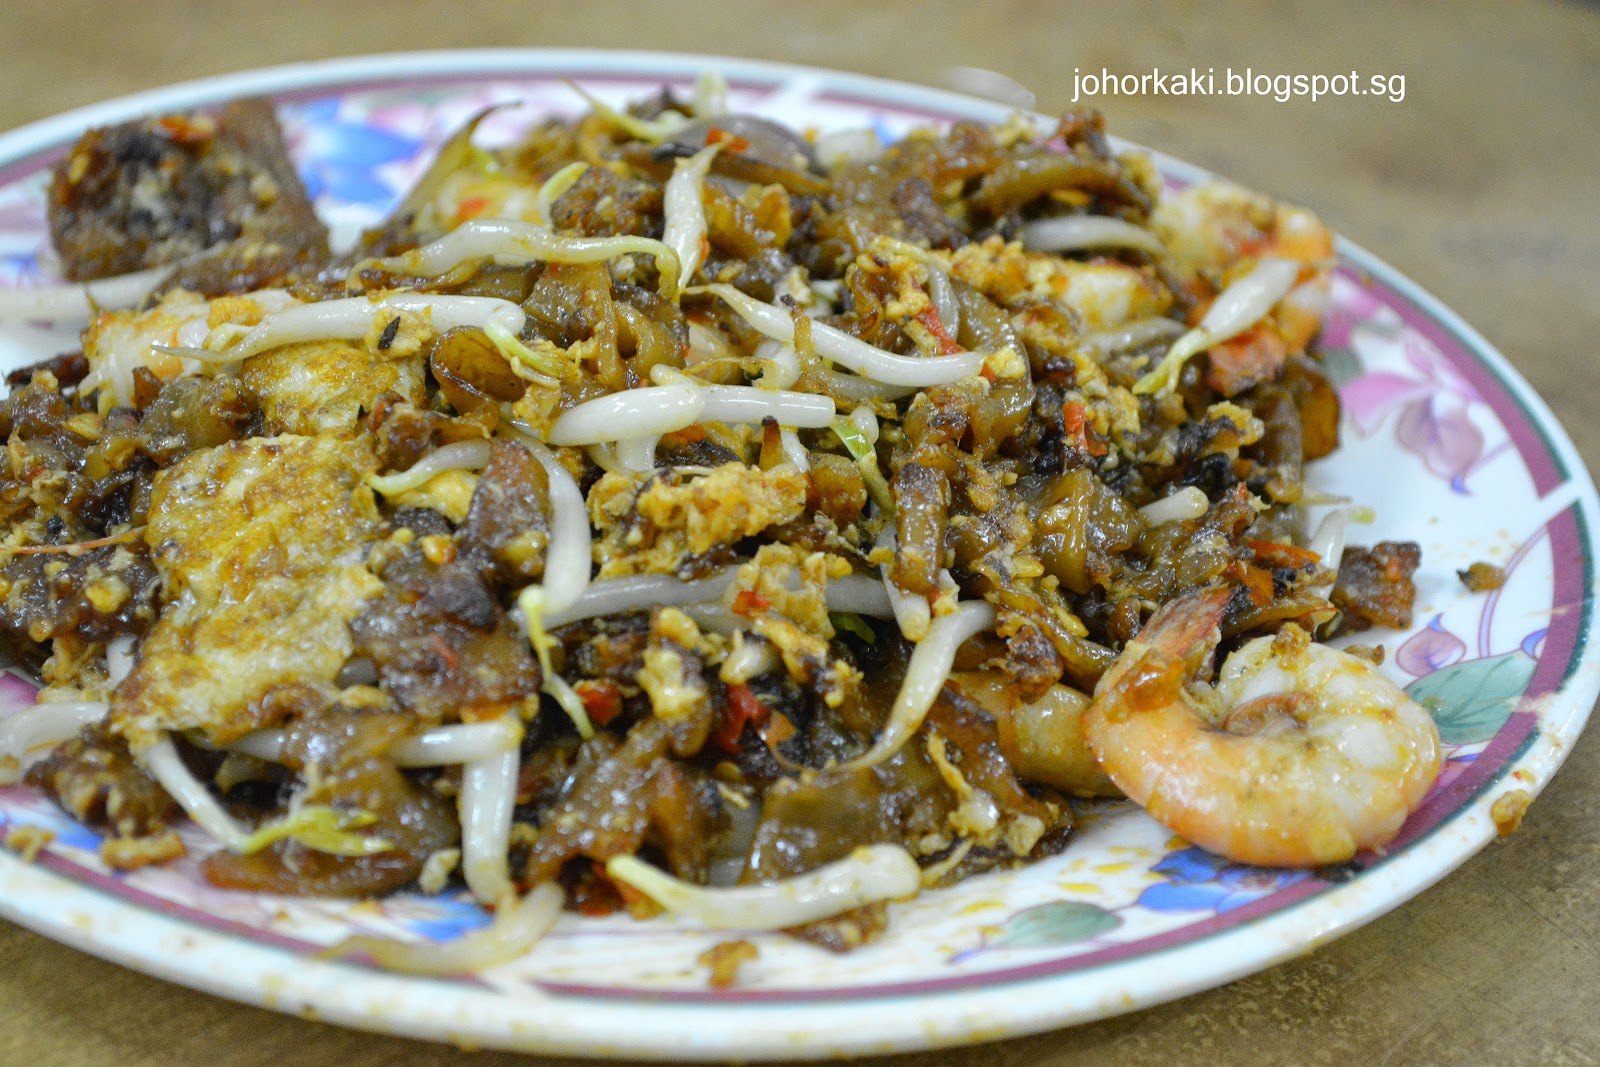 Not Penang Top 10 Best Food 不是槟城10大最佳美食 |Tony Johor Kaki Travels for